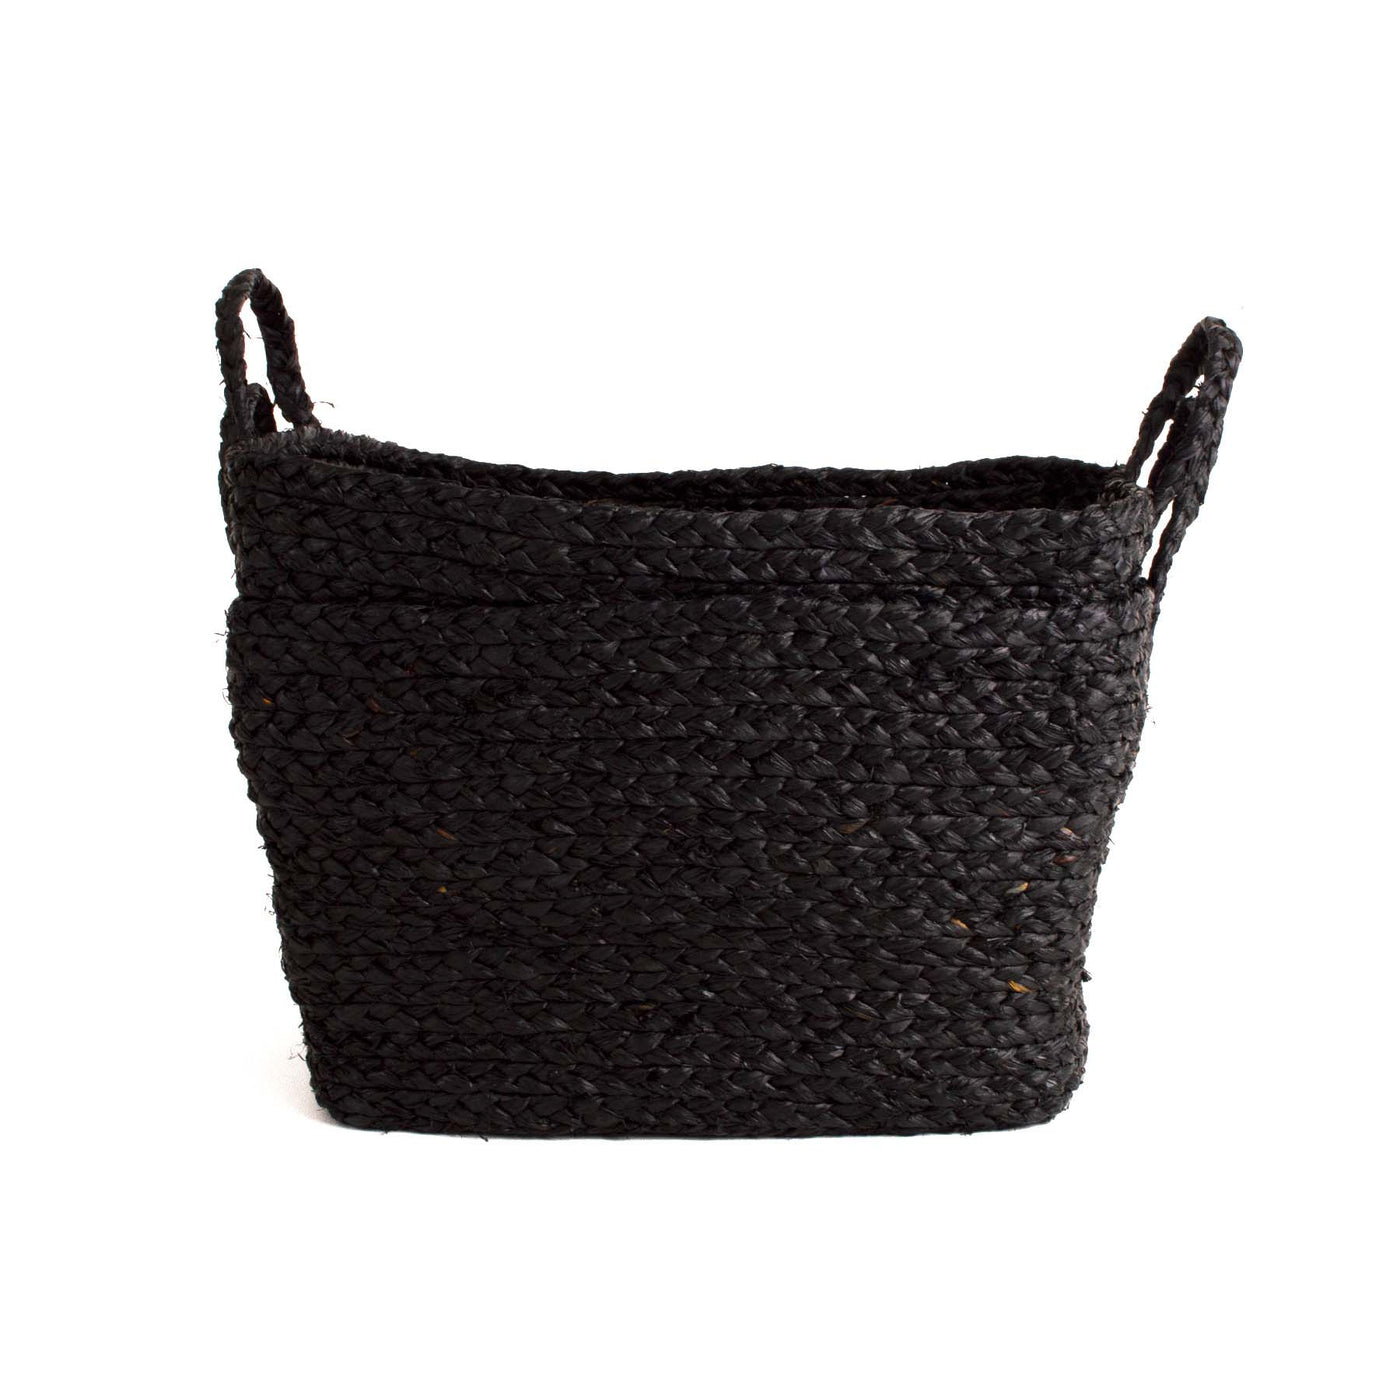 Storage Basket with Handles, Set of 2 - Black